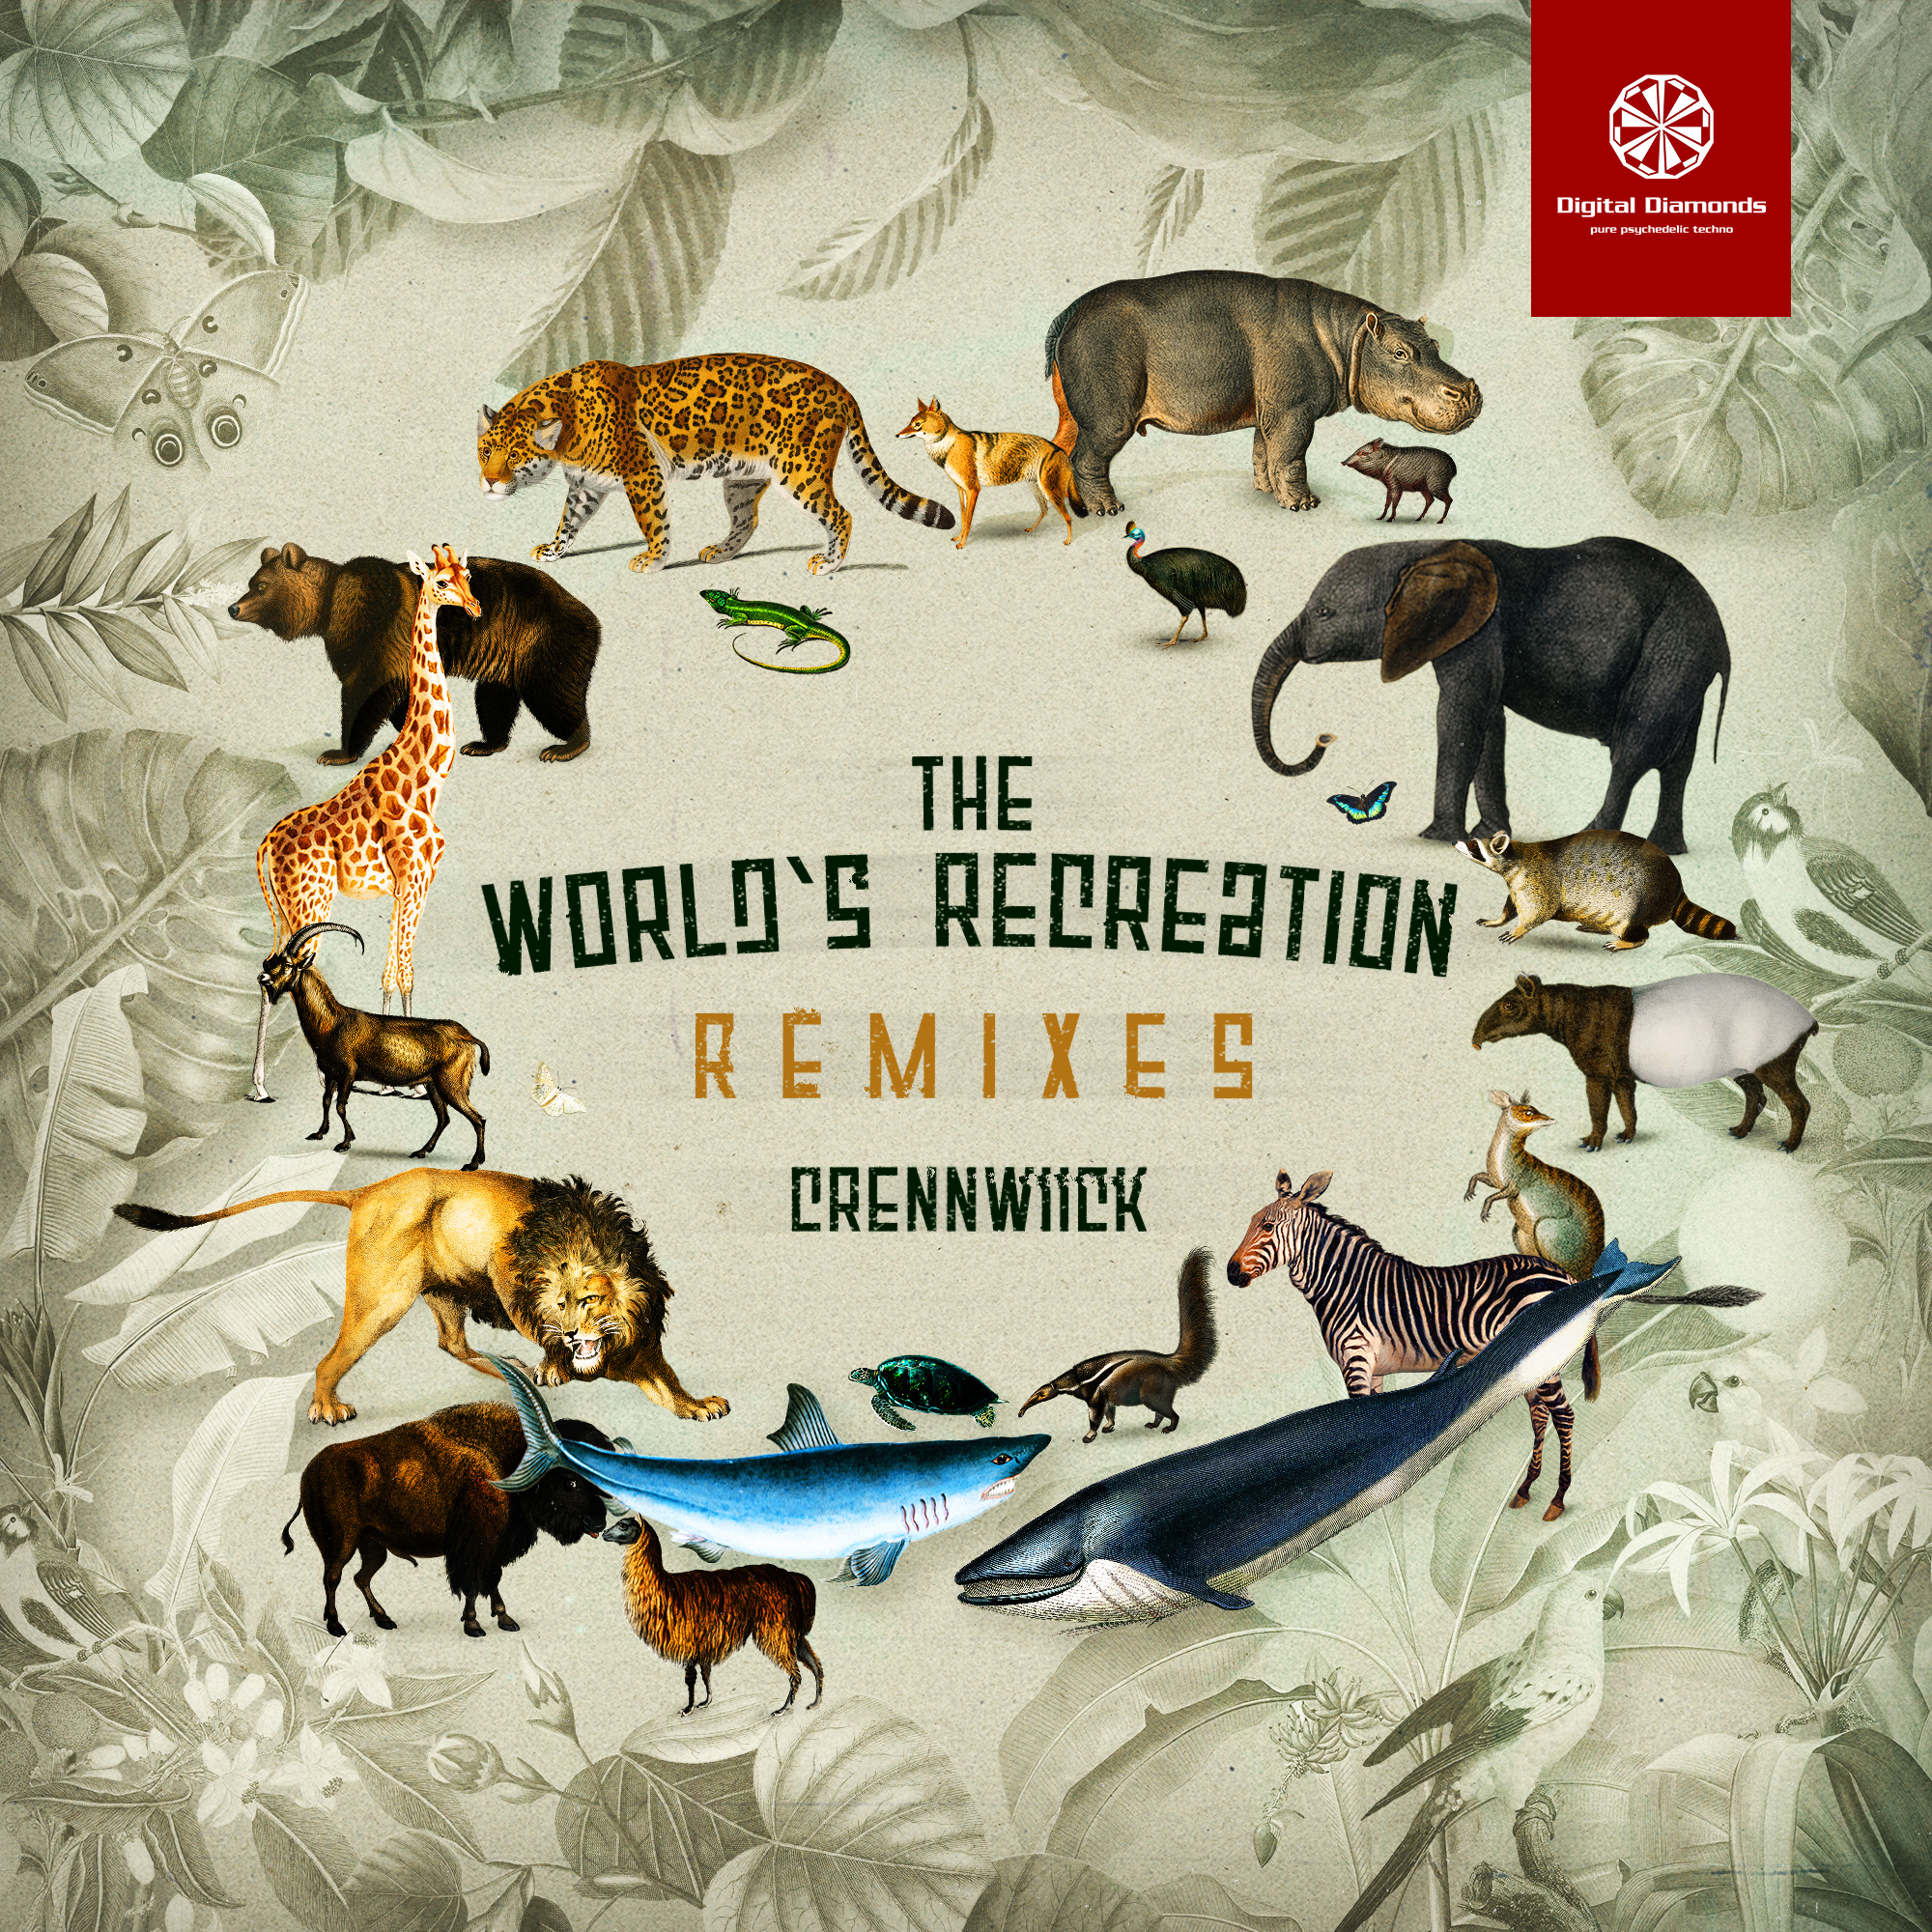 Crennwiick – The World's Recreation Remixes